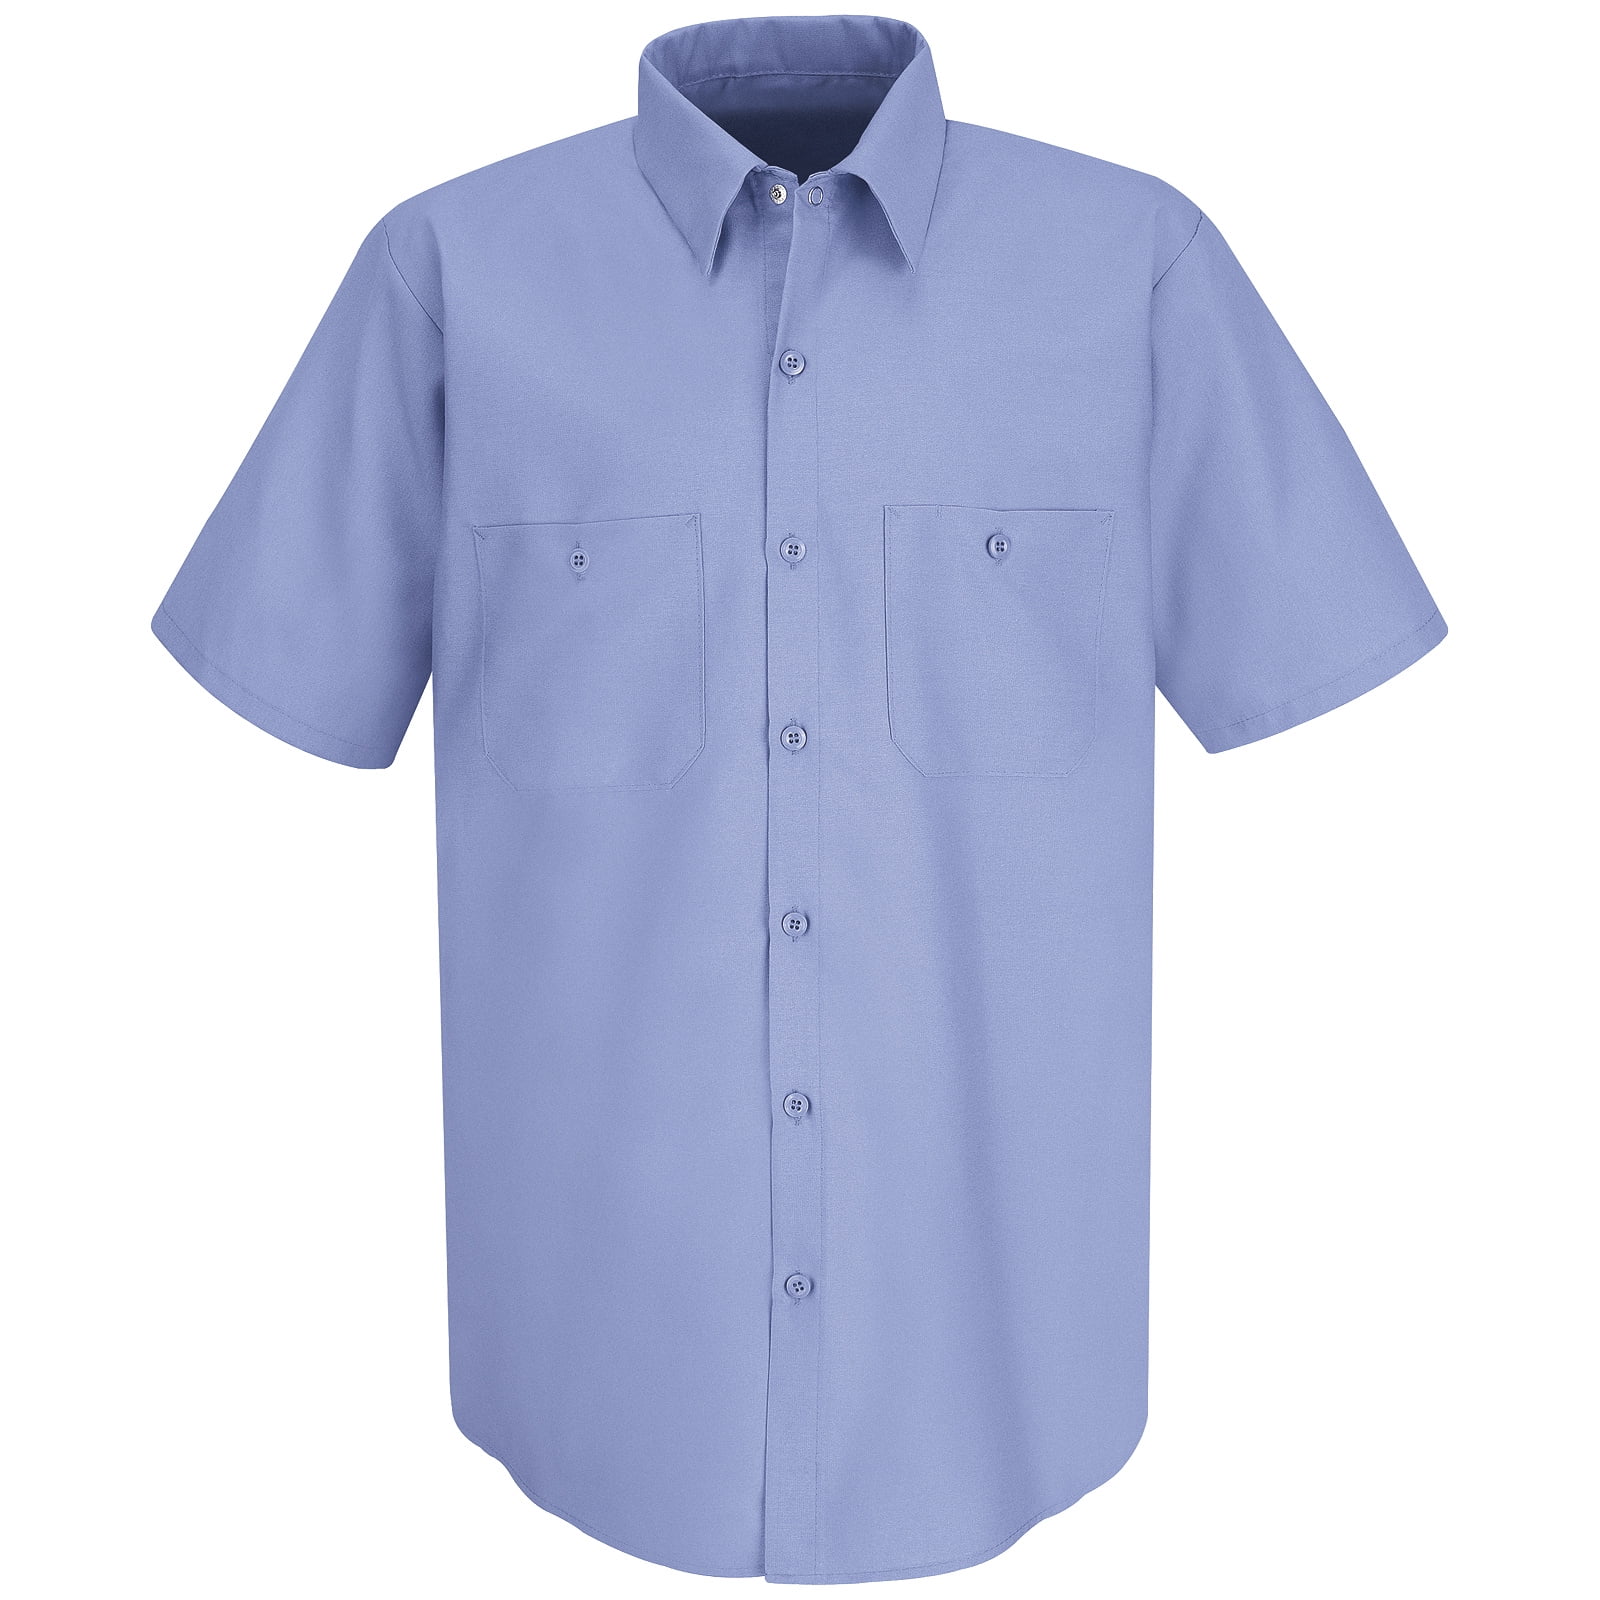 Red Kap® Men's Short Sleeve Wrinkle-Resistant Cotton Work Shirt ...